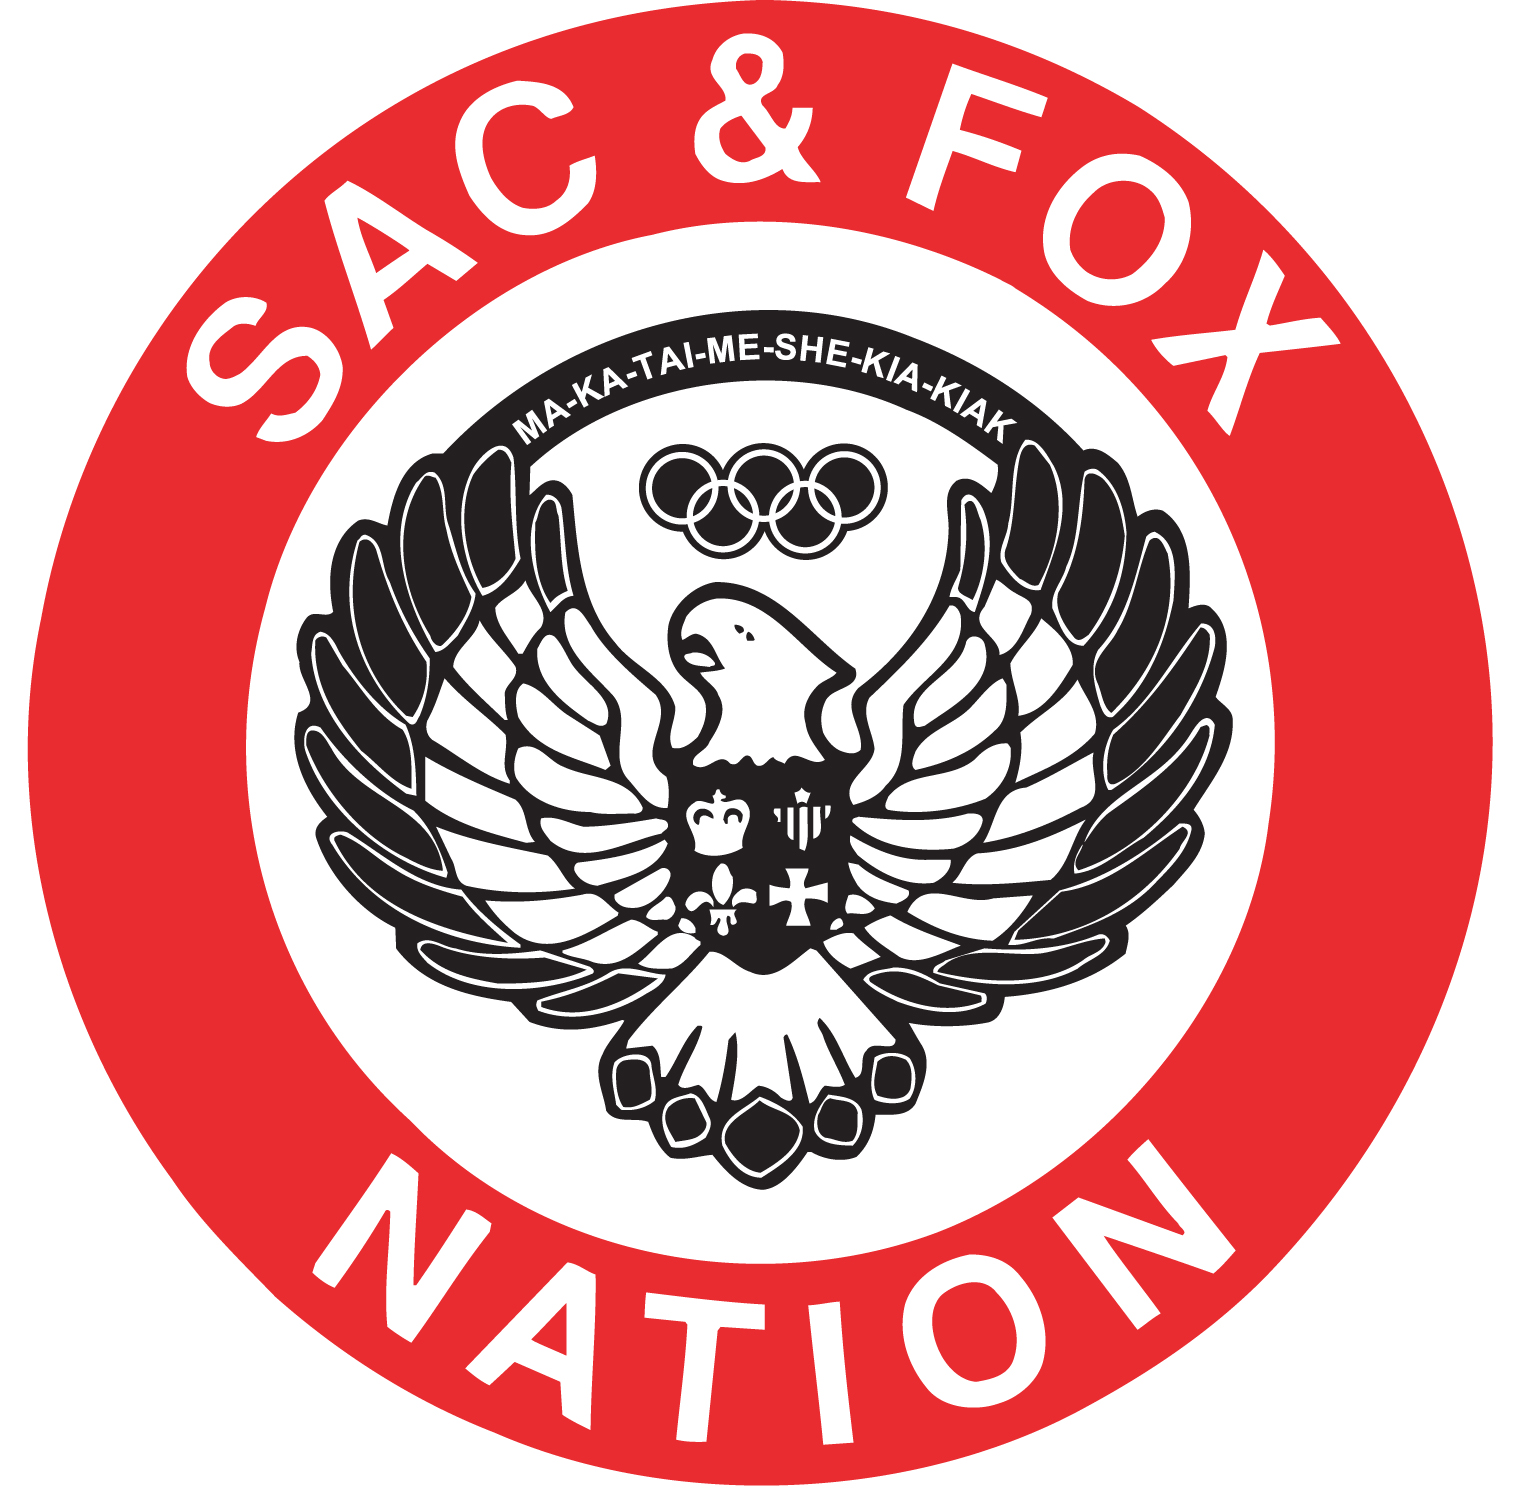 Sac & Fox 2 color logo.jpg